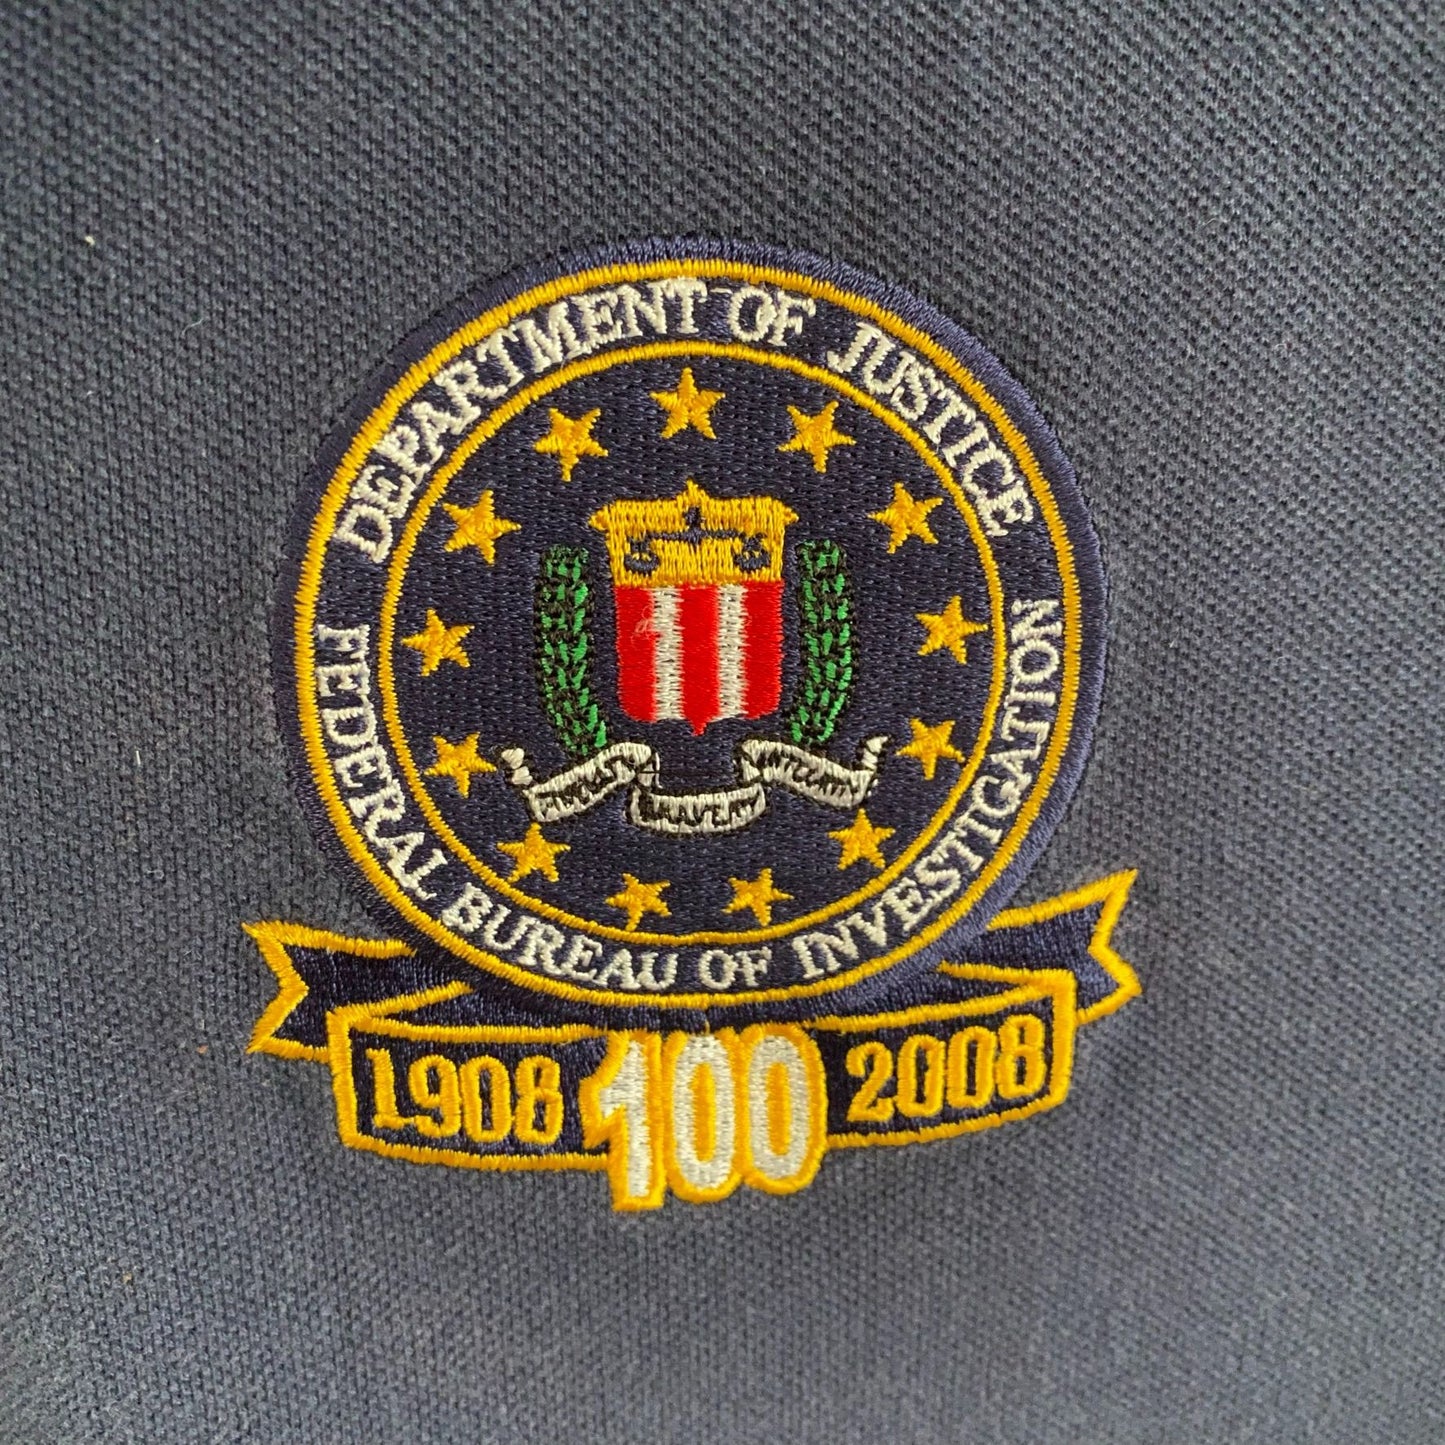 Vintage FBI 100 Years Polo Shirt